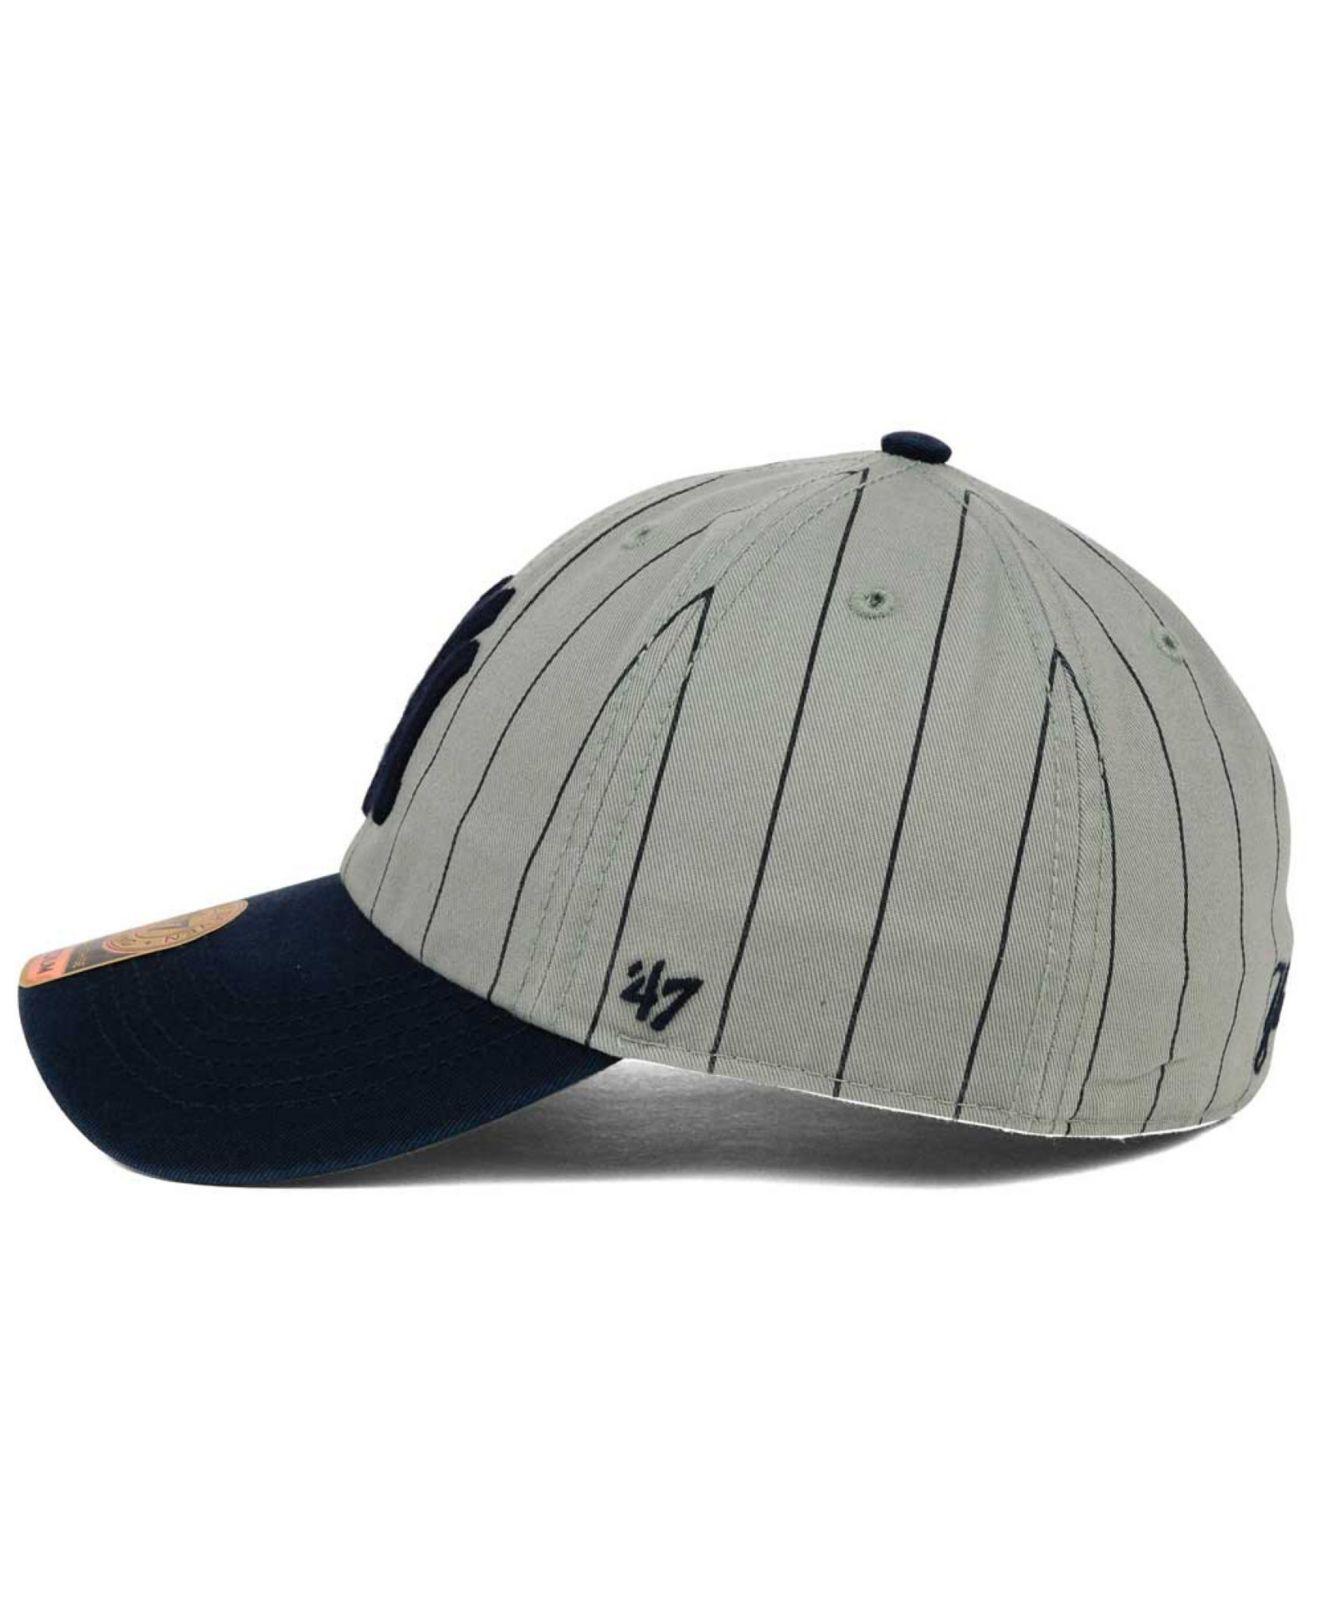 FALTON New York Yankees navy 47 Brand Relaxed Fit Cap